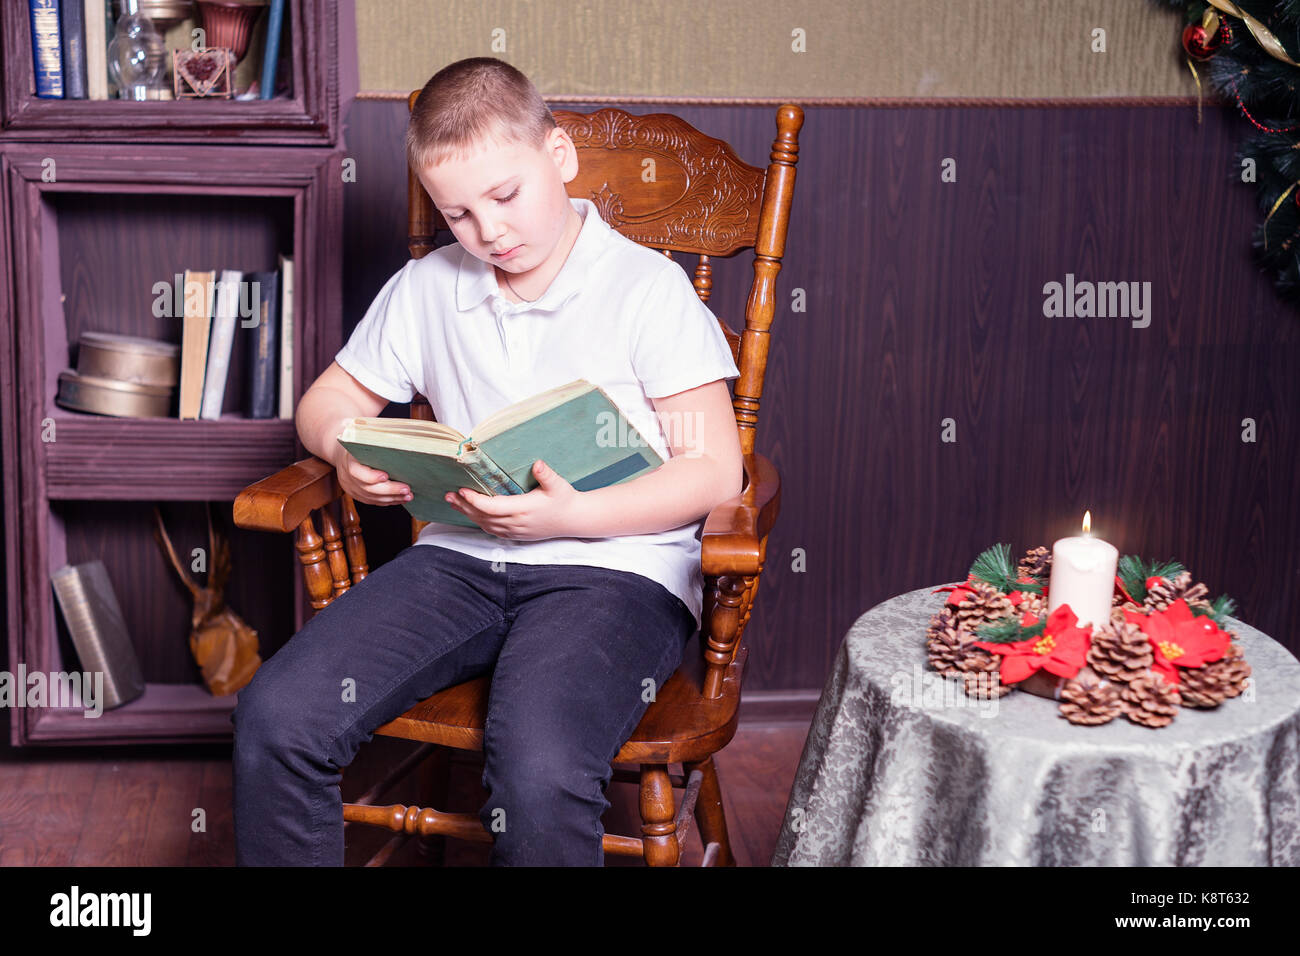 Boy reading book Stock Photo